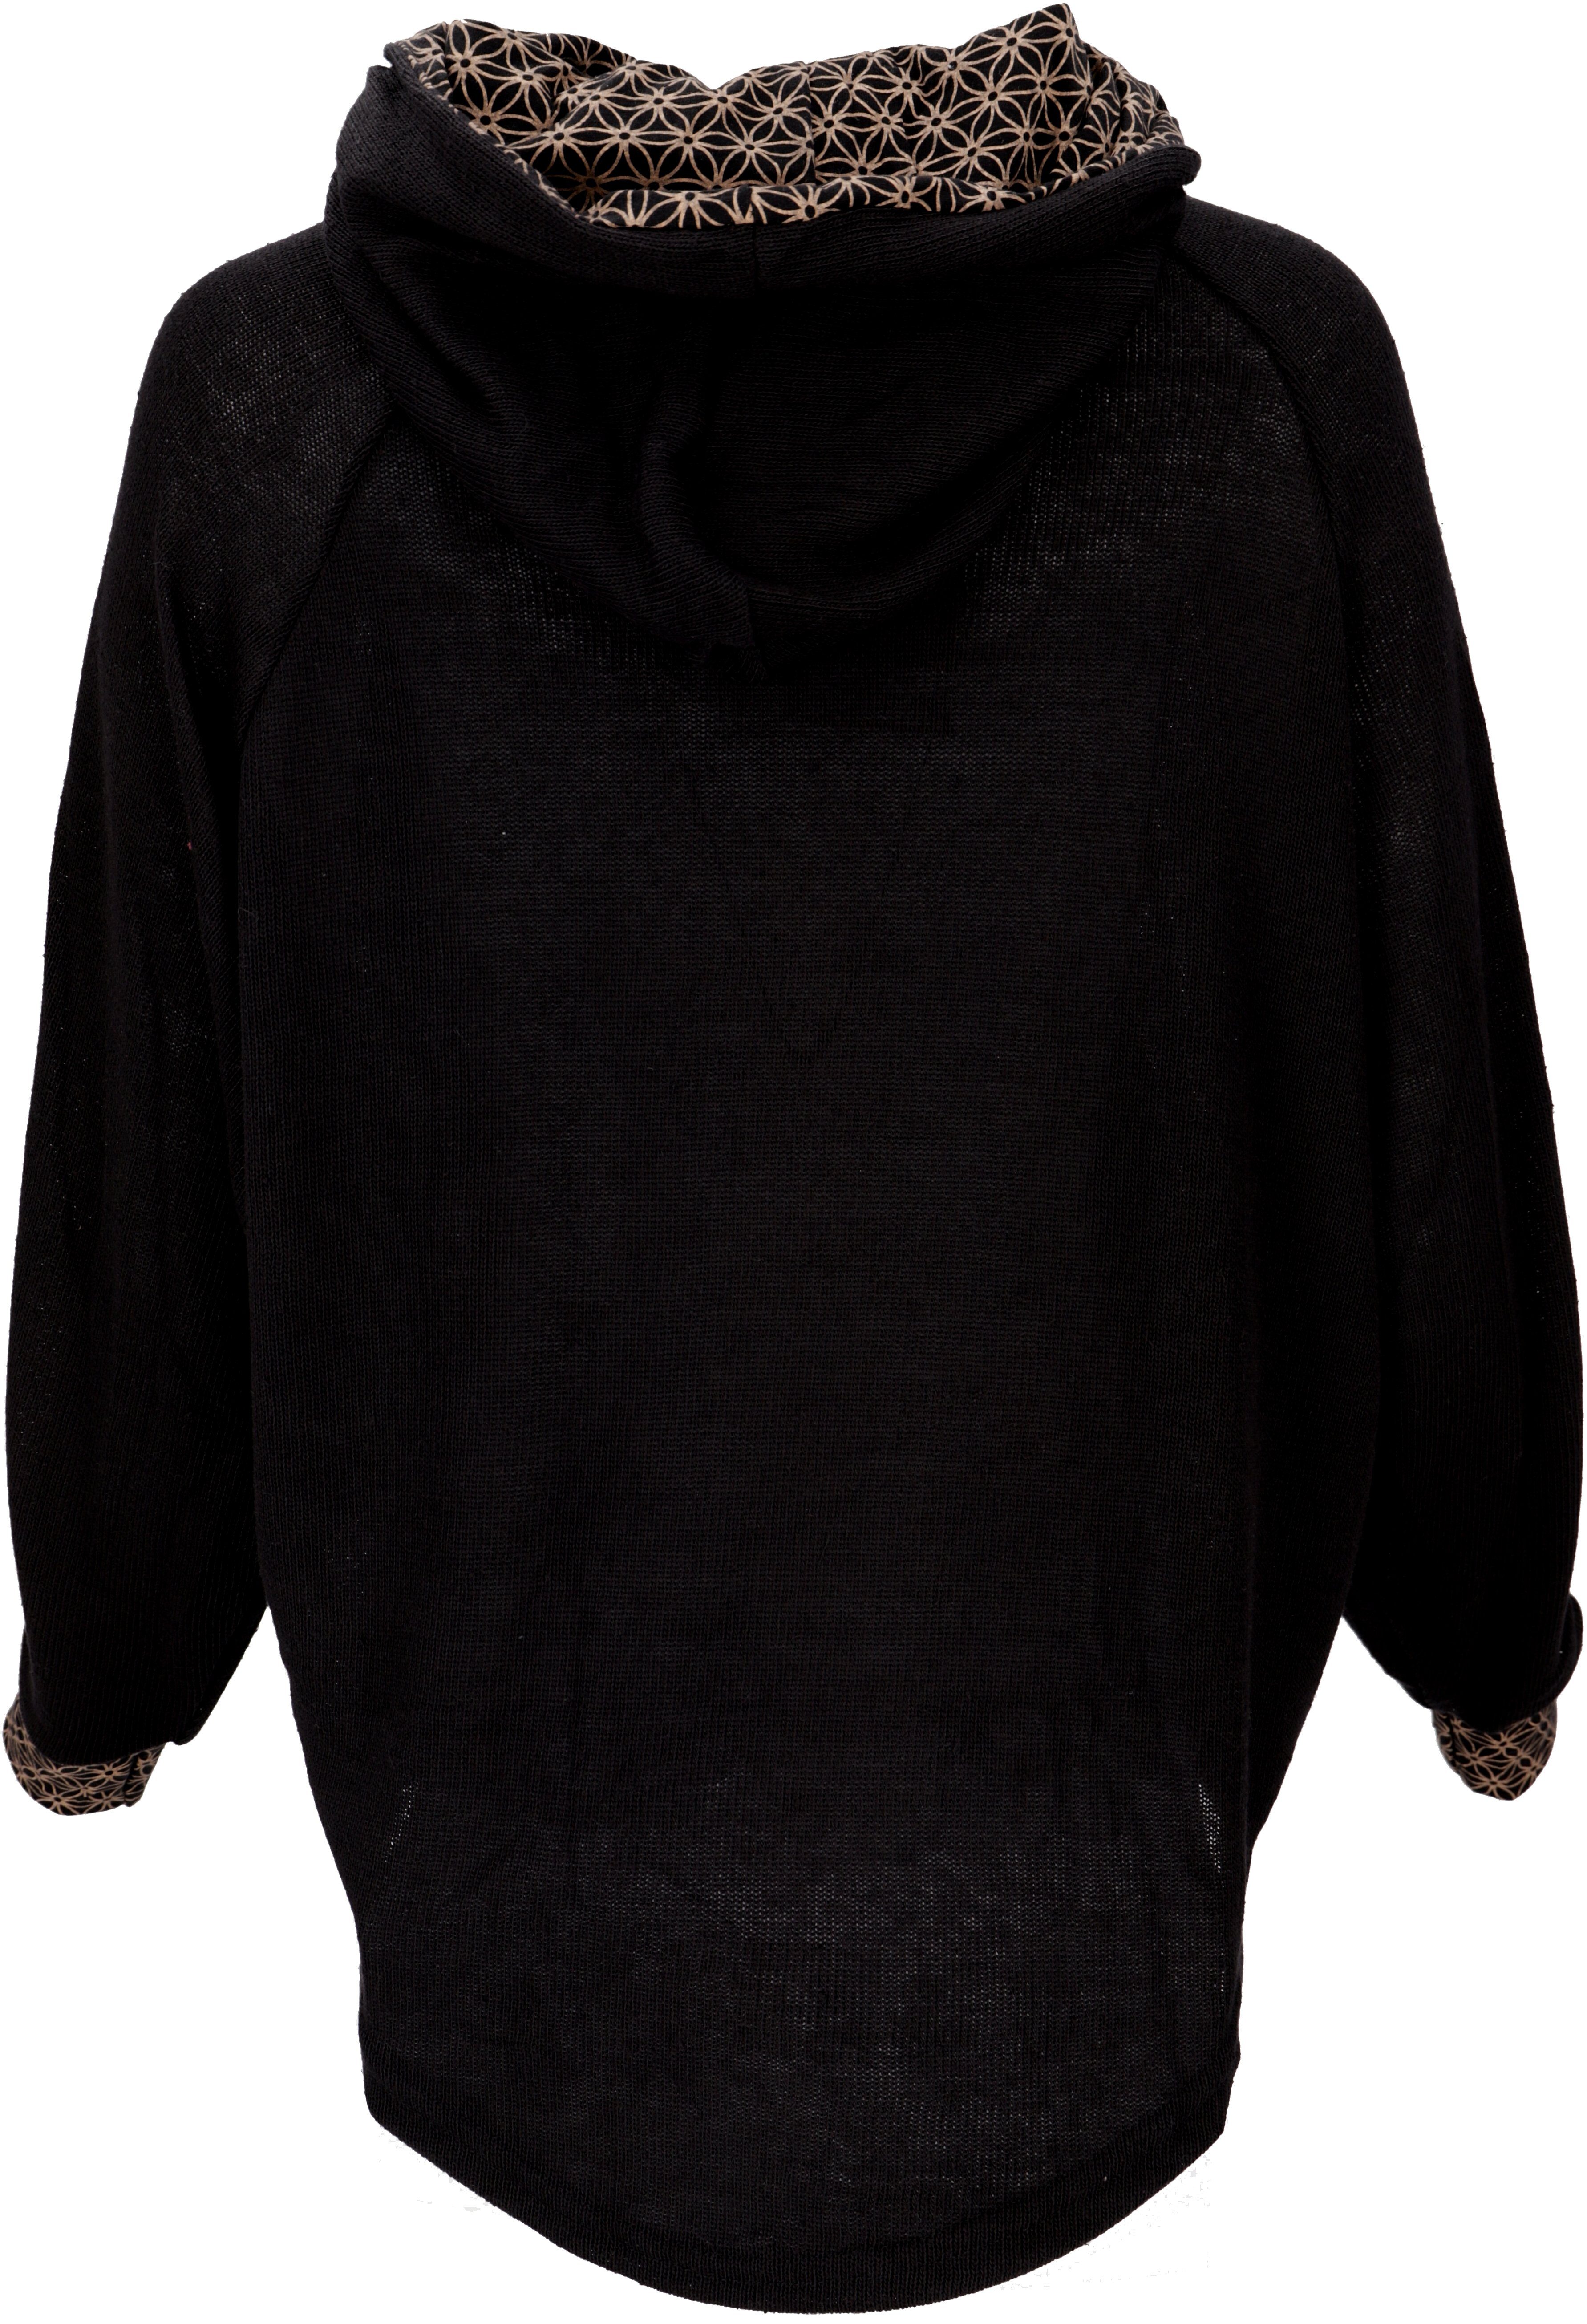 Guru-Shop -.. Kapuzenpullover schwarz Sweatshirt, Hoody, Pullover, Longsleeve alternative Bekleidung